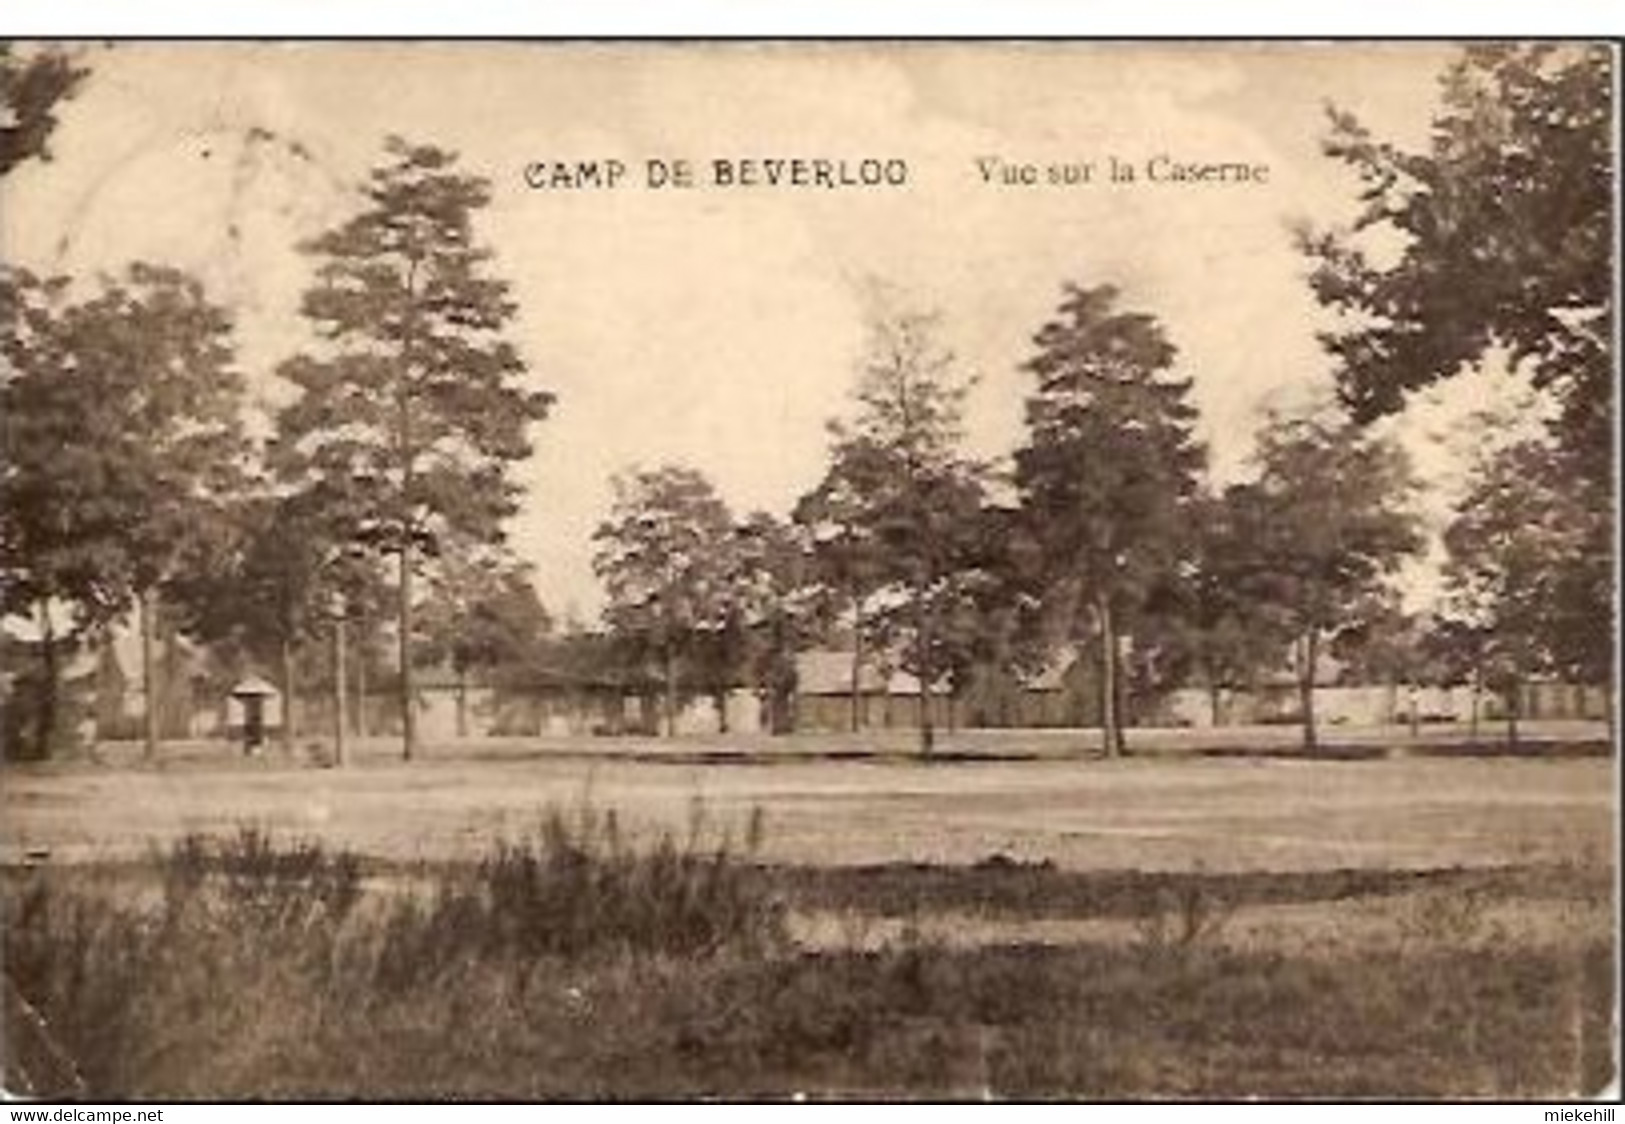 CAMP DE BEVERLOO-VUE SUR LA CASERNE - Leopoldsburg (Beverloo Camp)